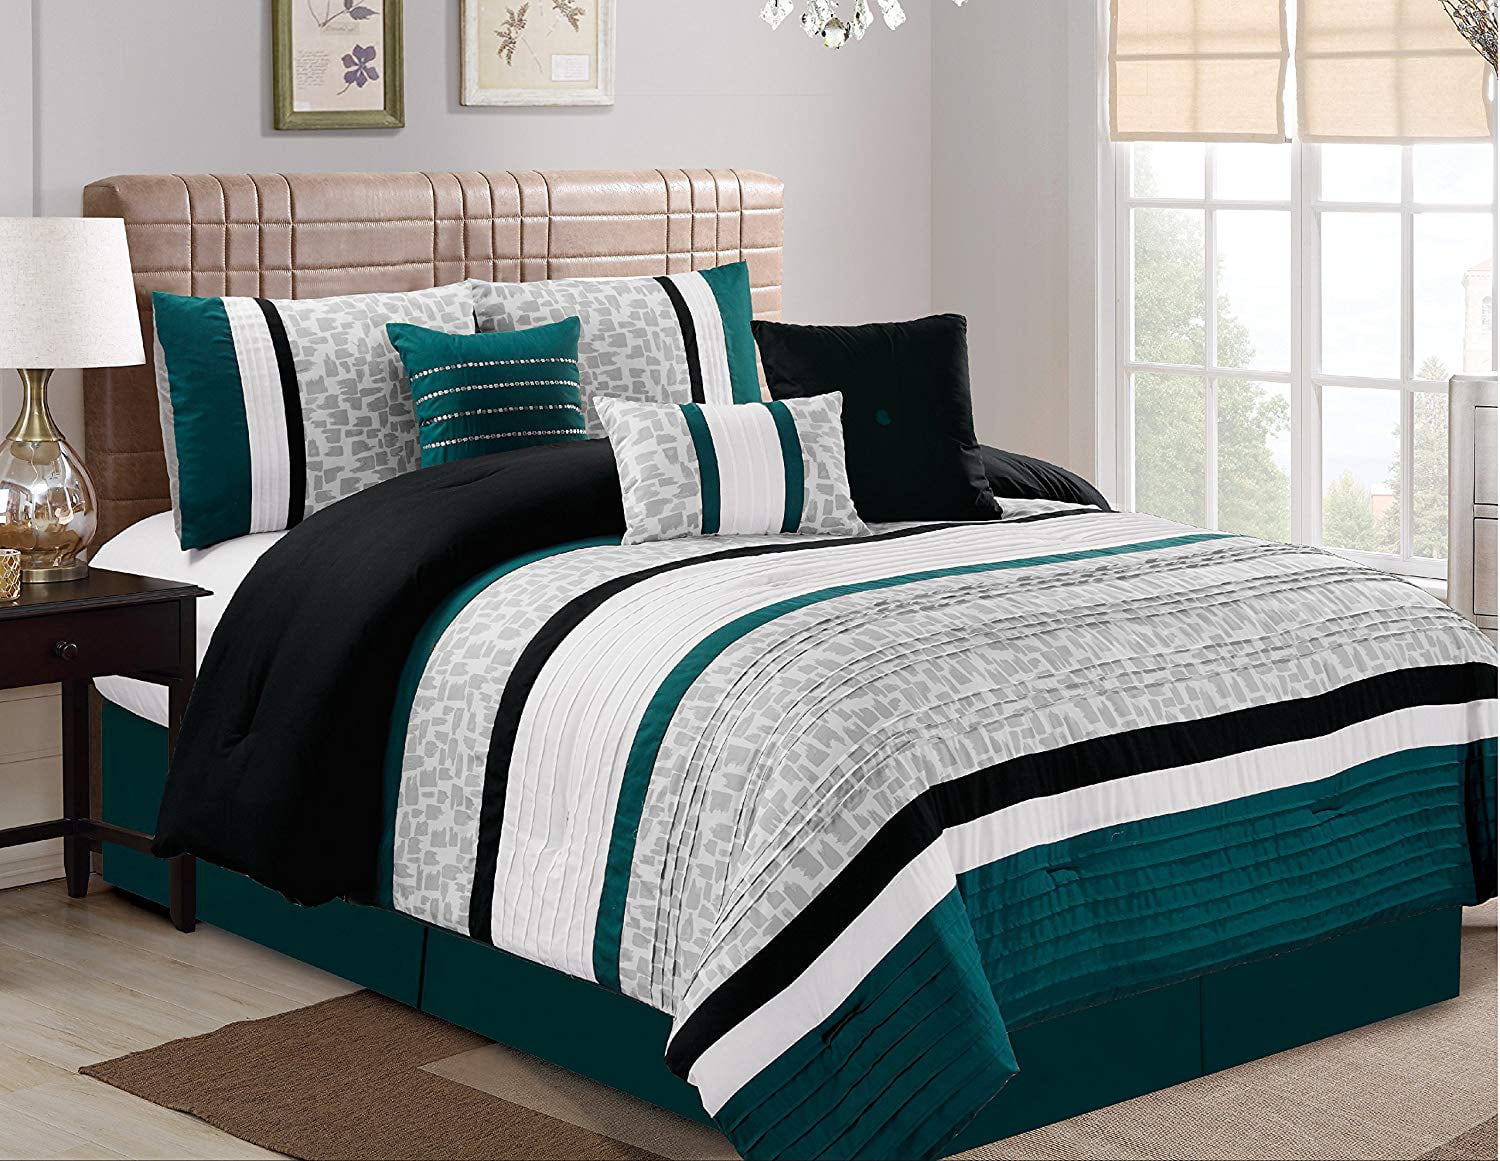 Hgmart Bedding Comforter Set 7 Piece, California King Bed Sheet And Comforter Set